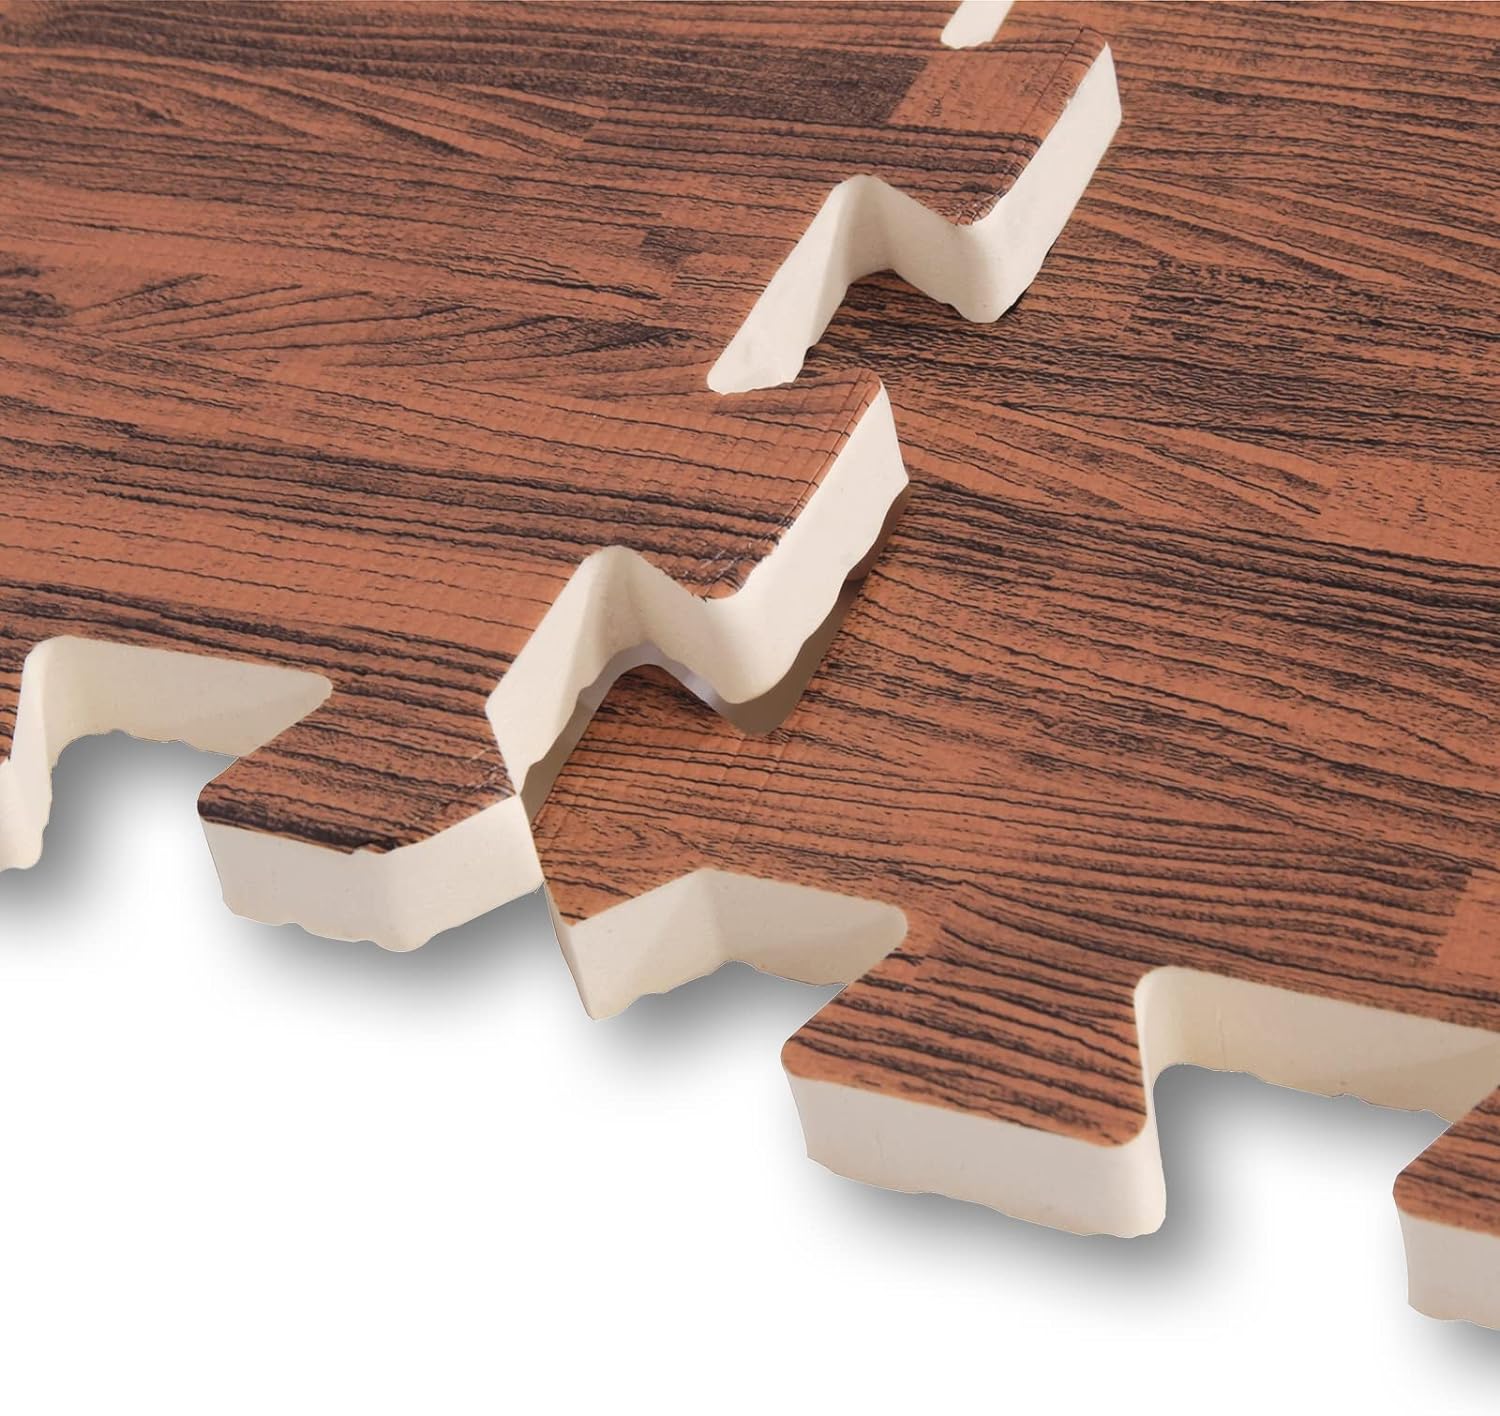 16pcs Interlocking Printed Wood Grain Eva Foam Mats Protective Floor Tiles Exercise Play Mat For Kids Room Parlor Bedroom Home 11.8" x 11.8" Wood Grain Brown By PAIDU